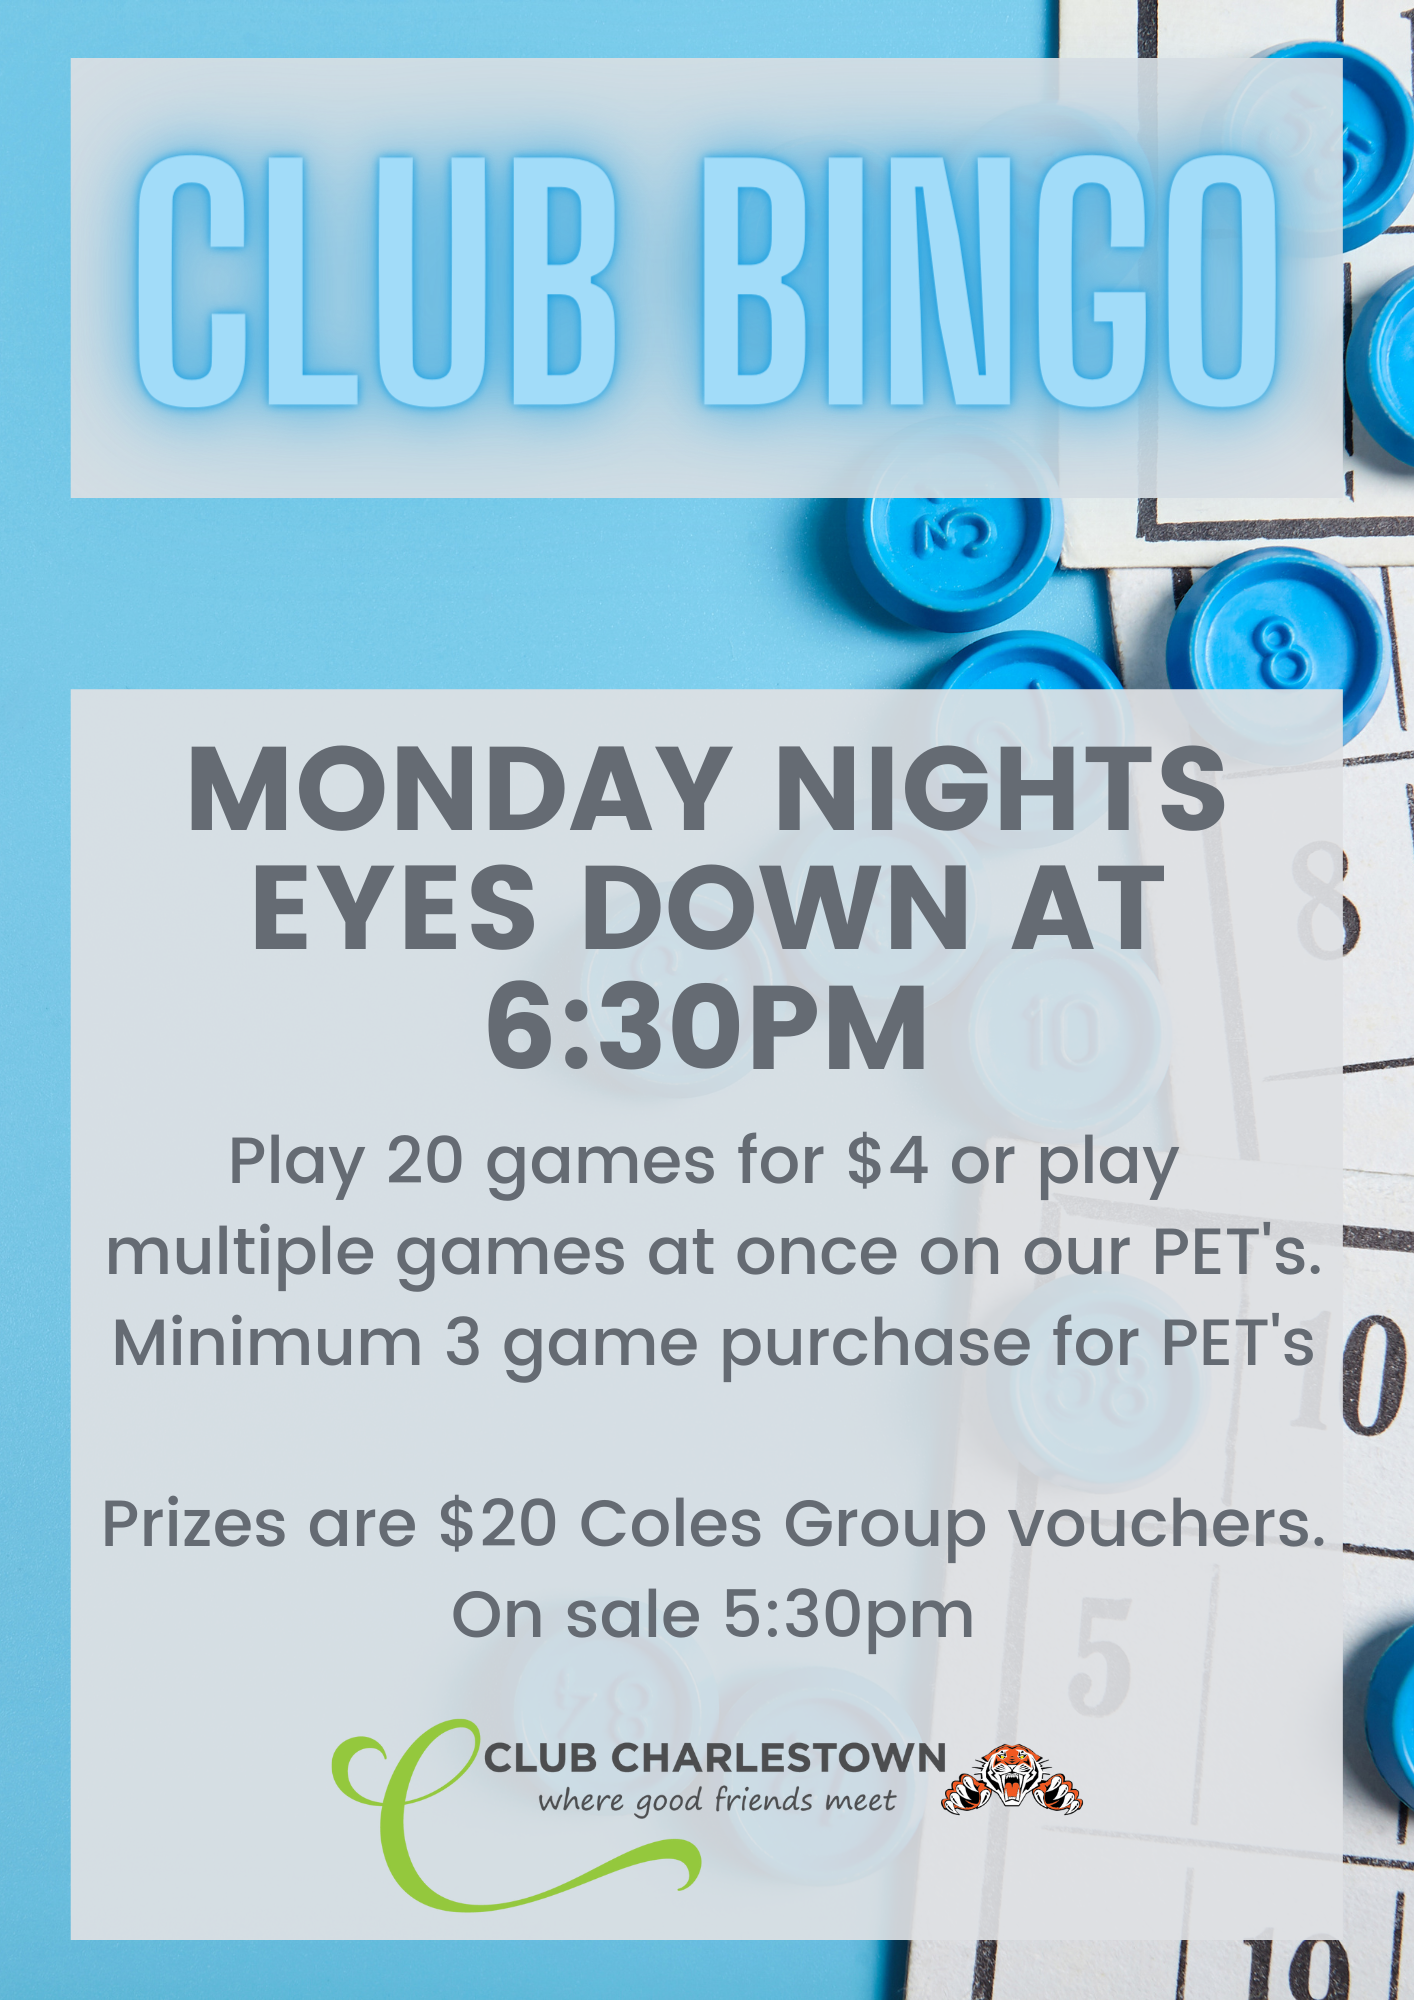 Monday Club Bingo – Club charlestown